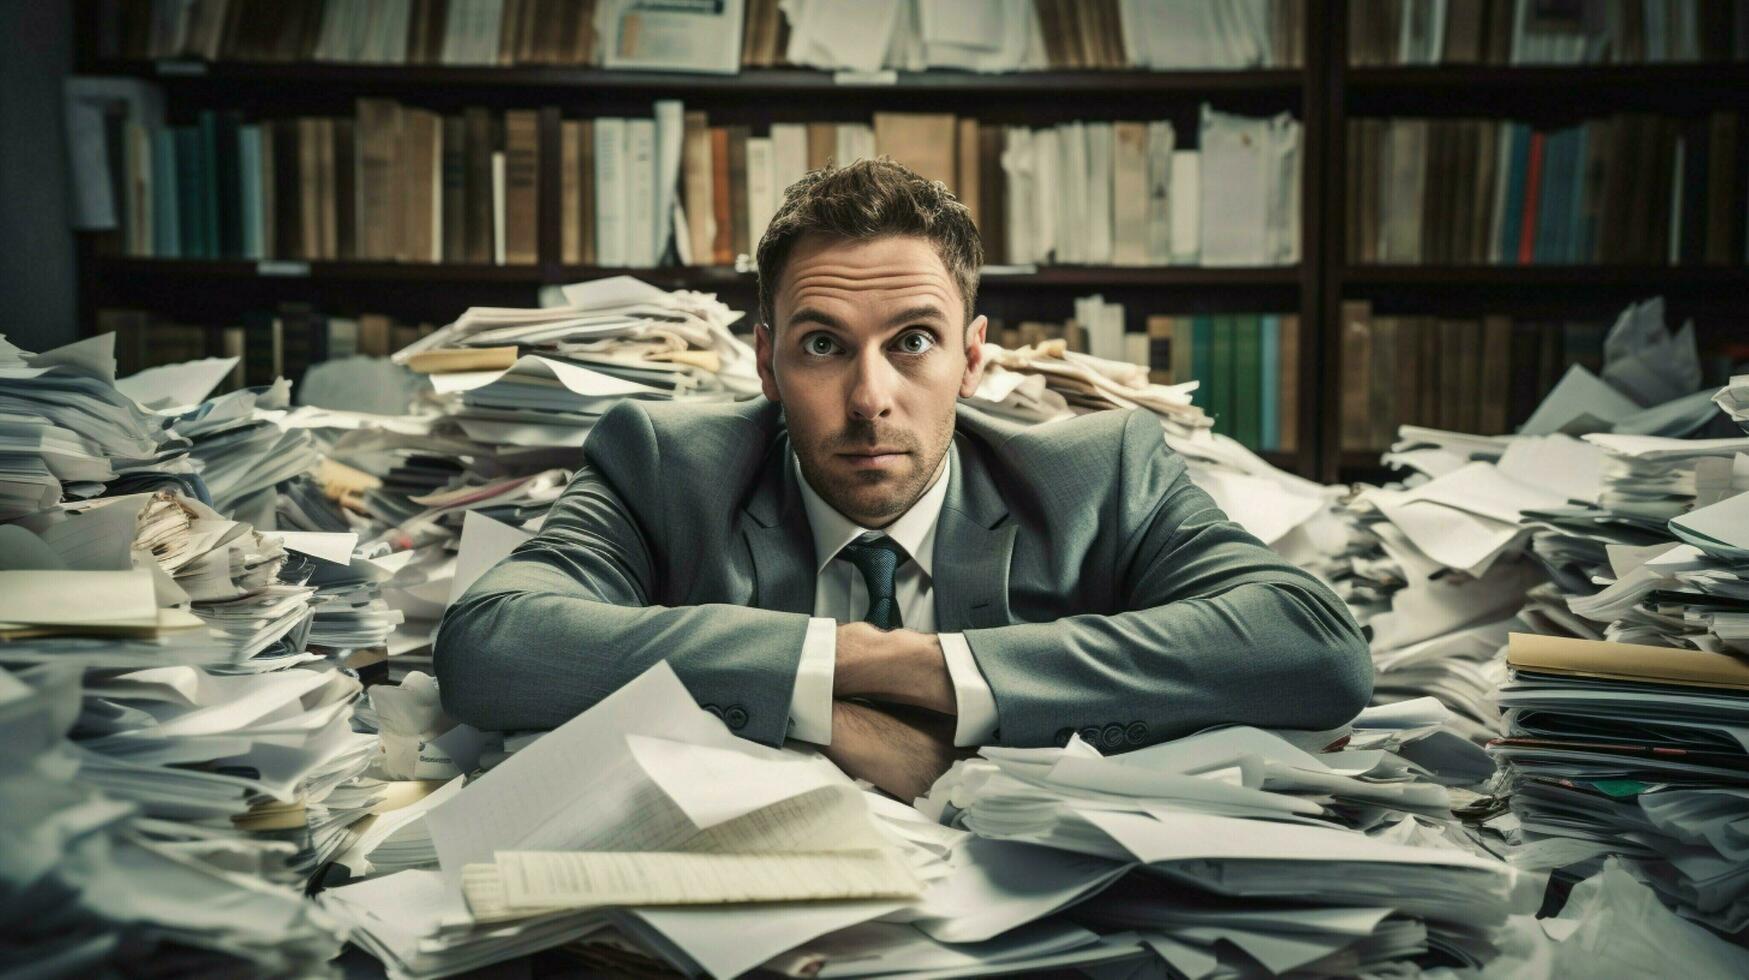 overworked businessman buried in paperwork on desk photo